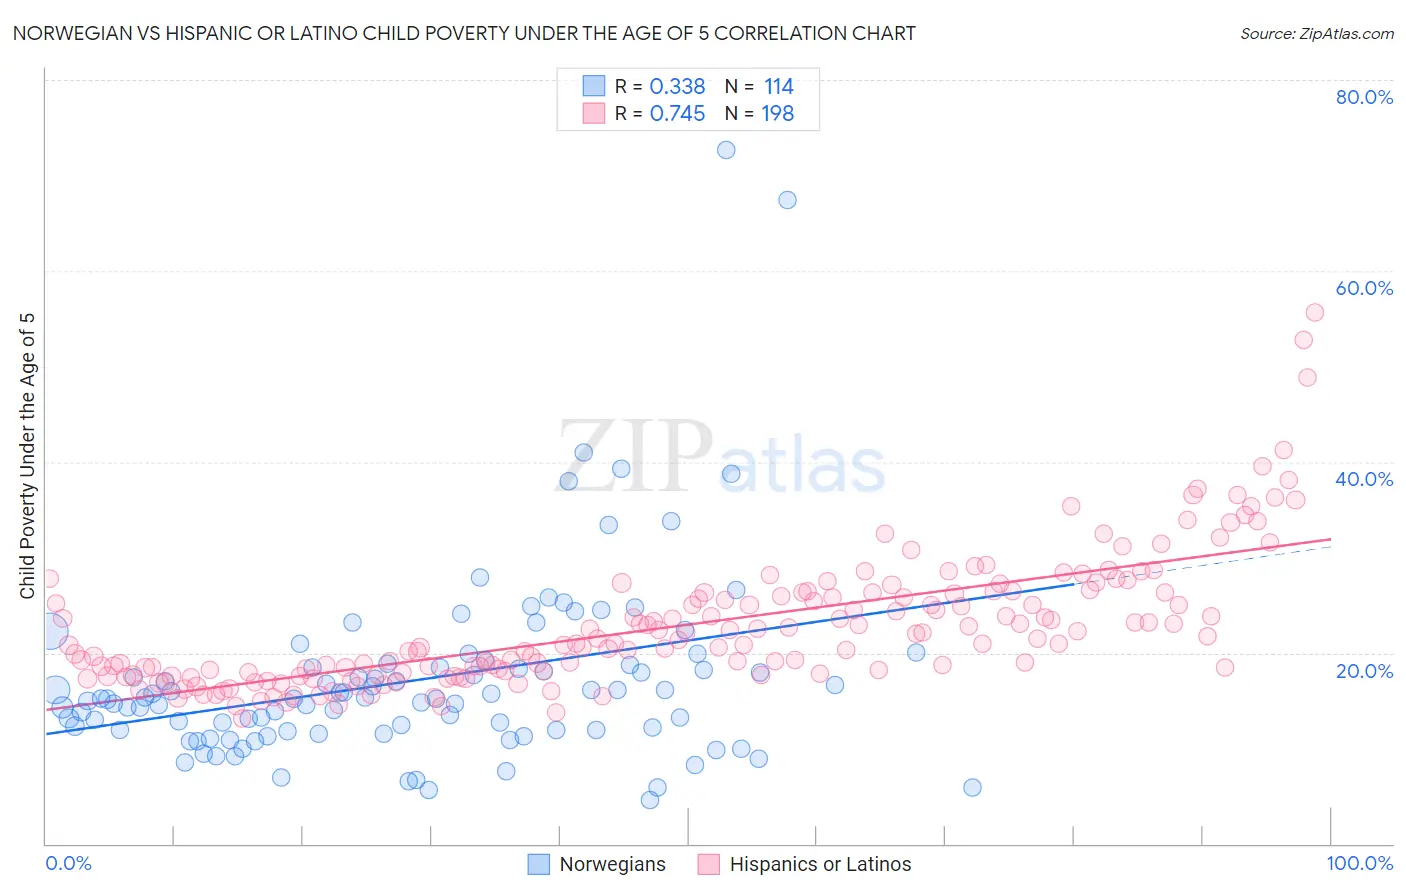 Norwegian vs Hispanic or Latino Child Poverty Under the Age of 5